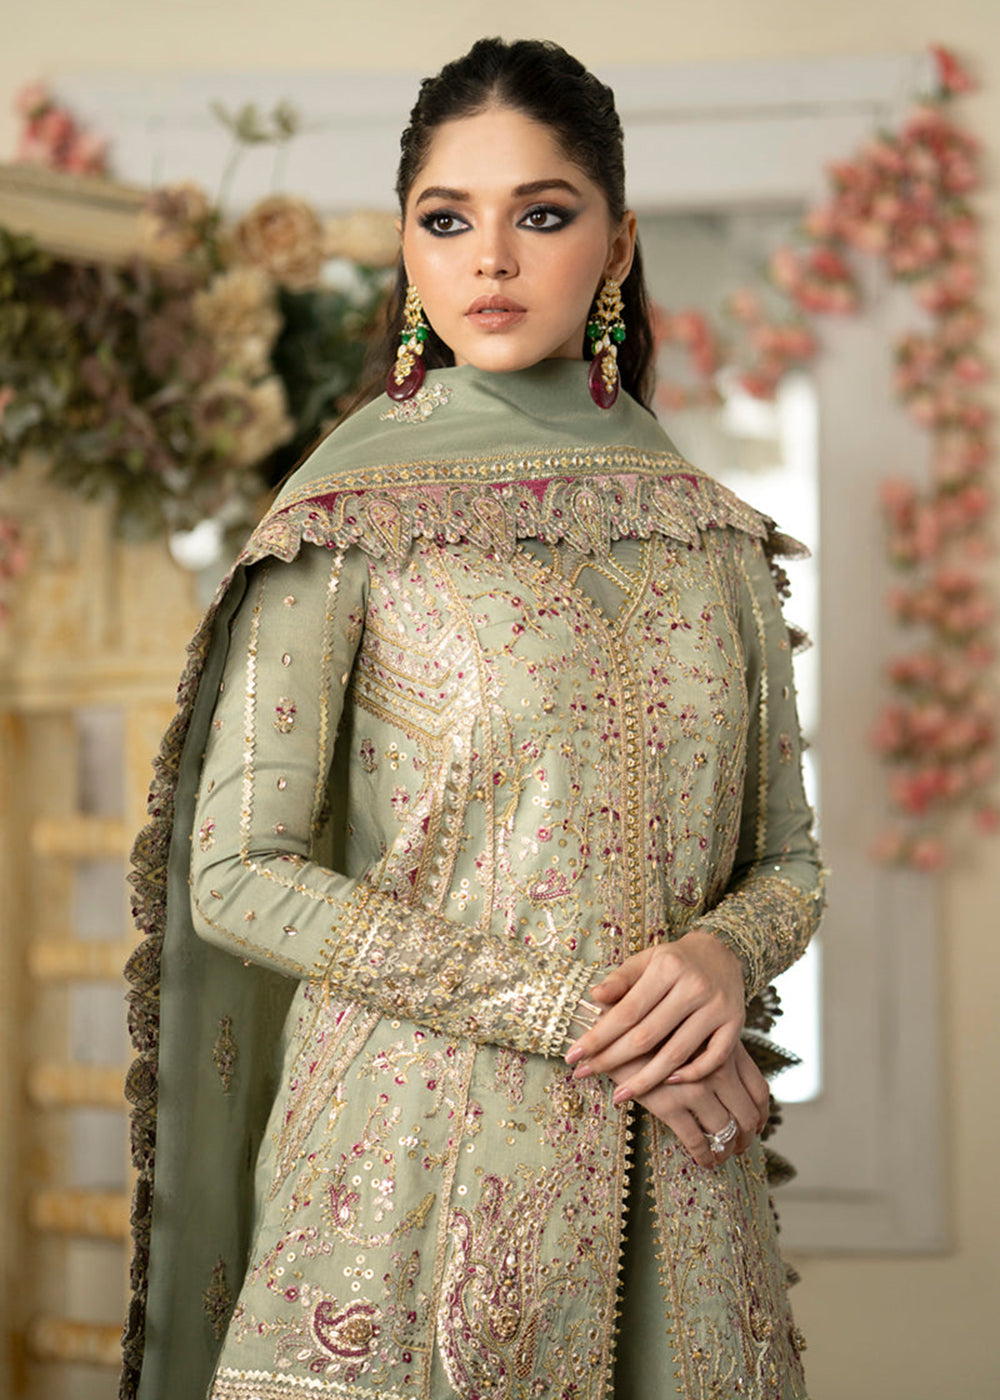 Buy Now Dilnaaz Wedding Formals 2023 by Qalamkar | DN-06 - FARIZA Online in USA, UK, Canada & Worldwide at Empress Clothing. 